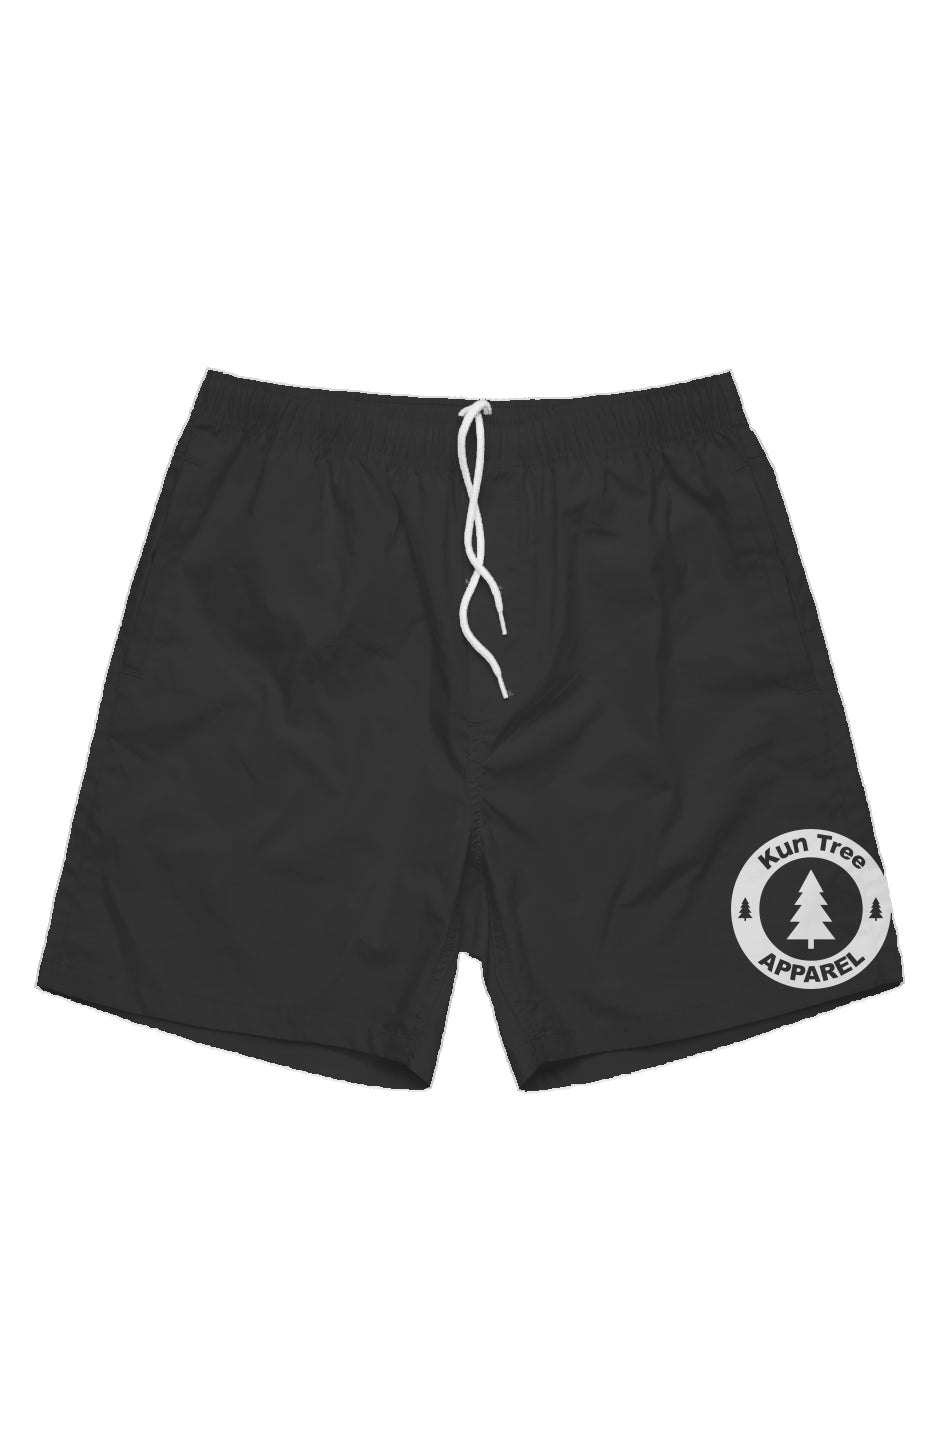 Kuntree logo shorts 